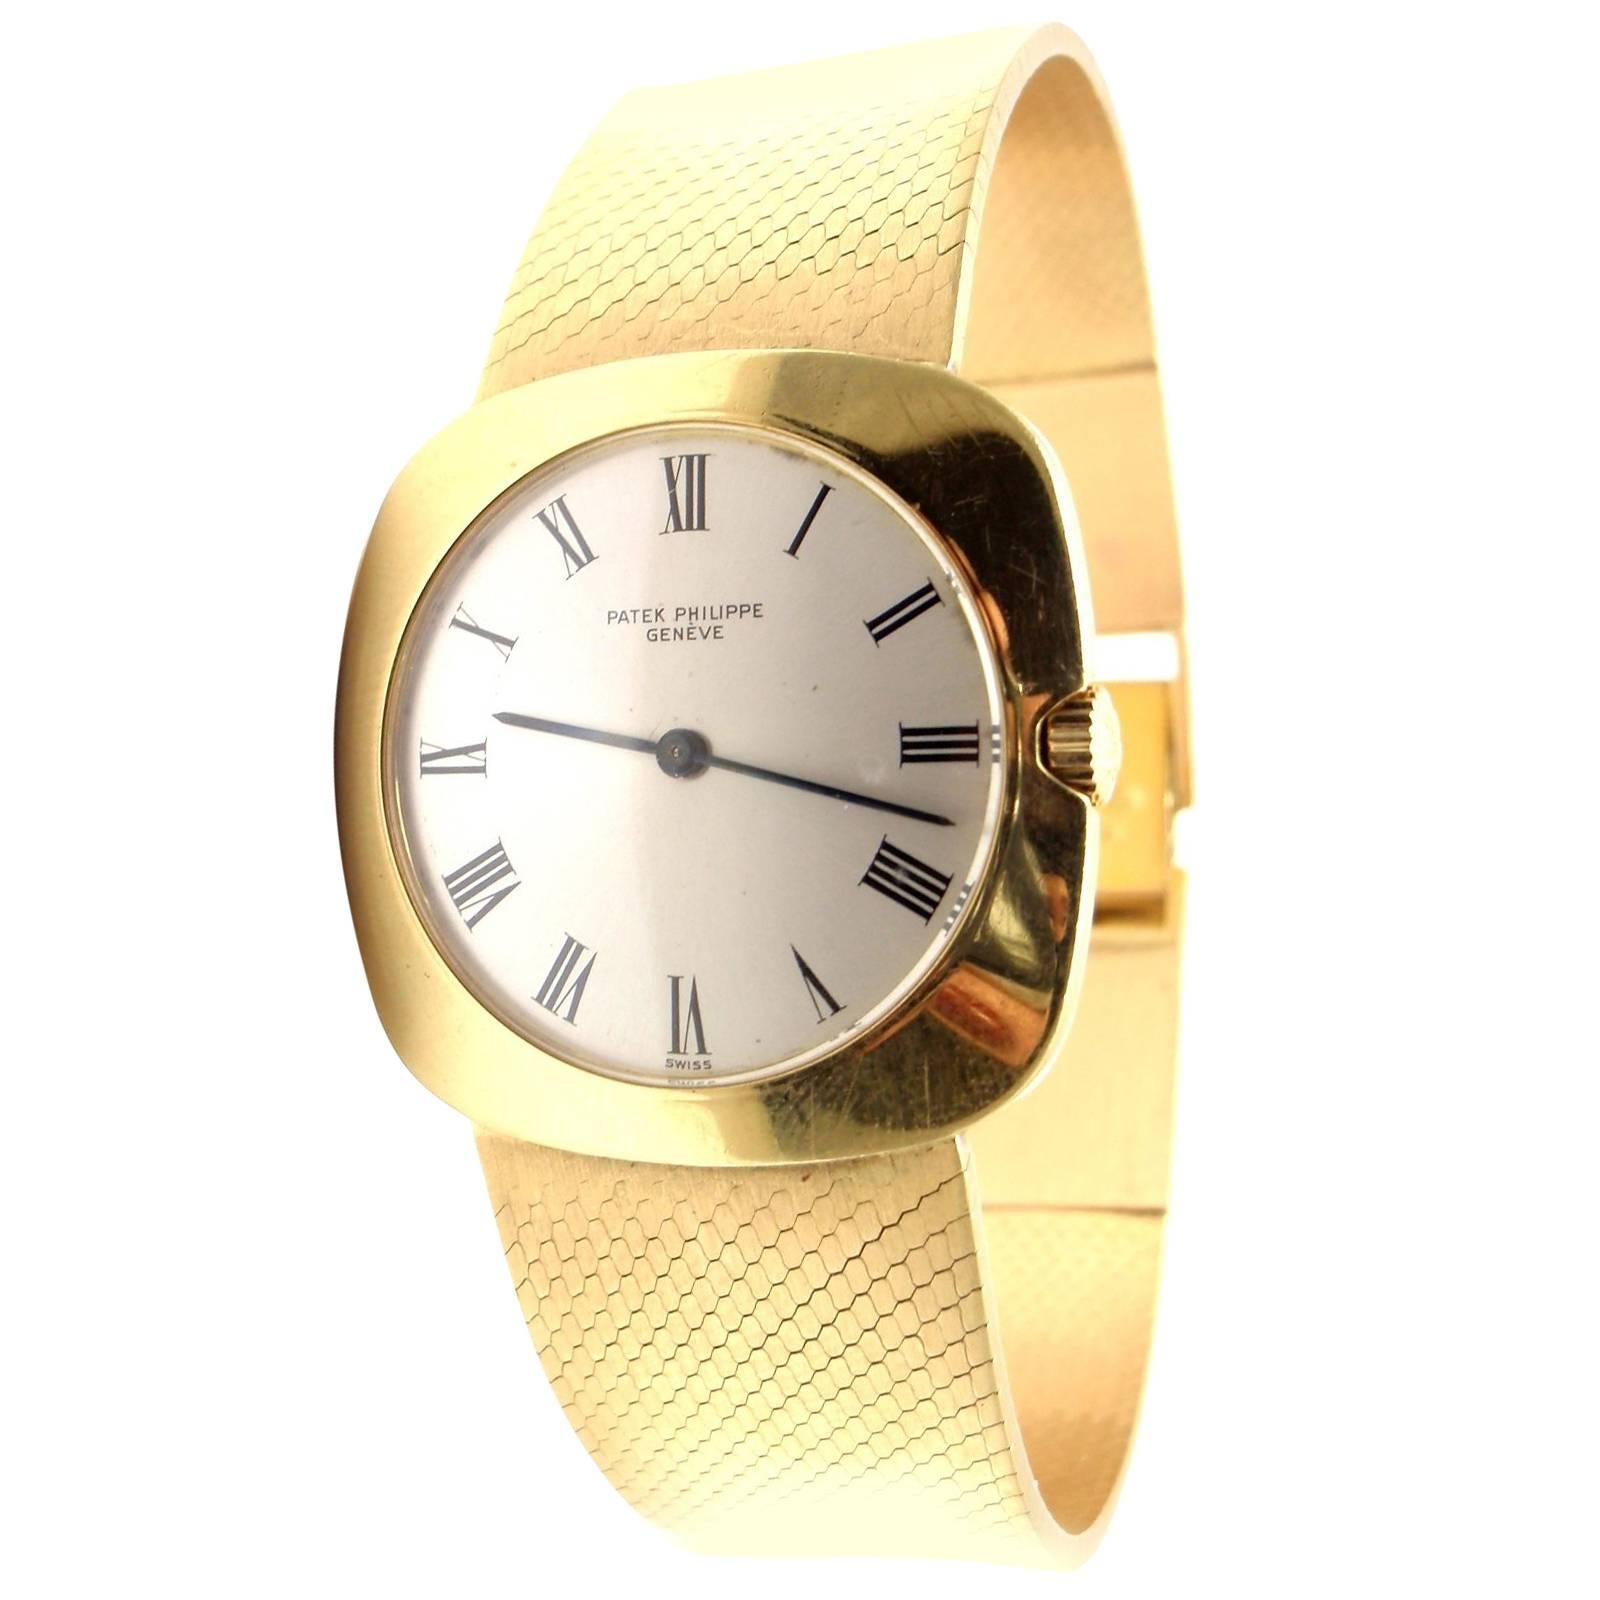 Patek Philippe Yellow Gold Manual Wind Wristwatch with Integral Bracelet Watch